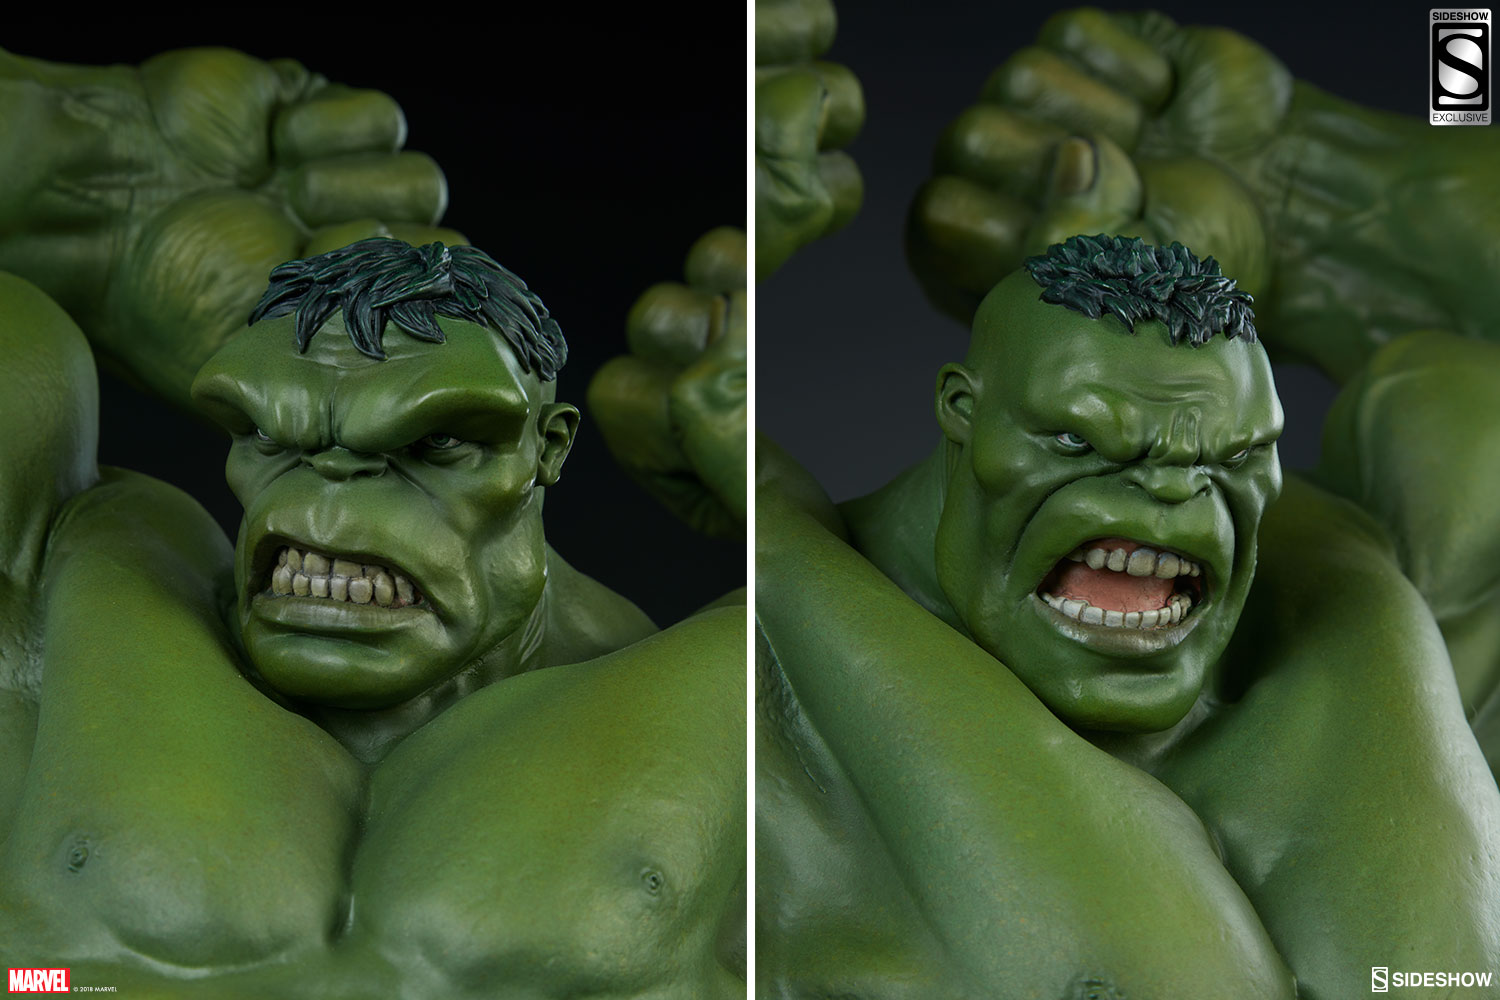 Hulk Smash! New photos of the Avengers Assemble Hulk have 